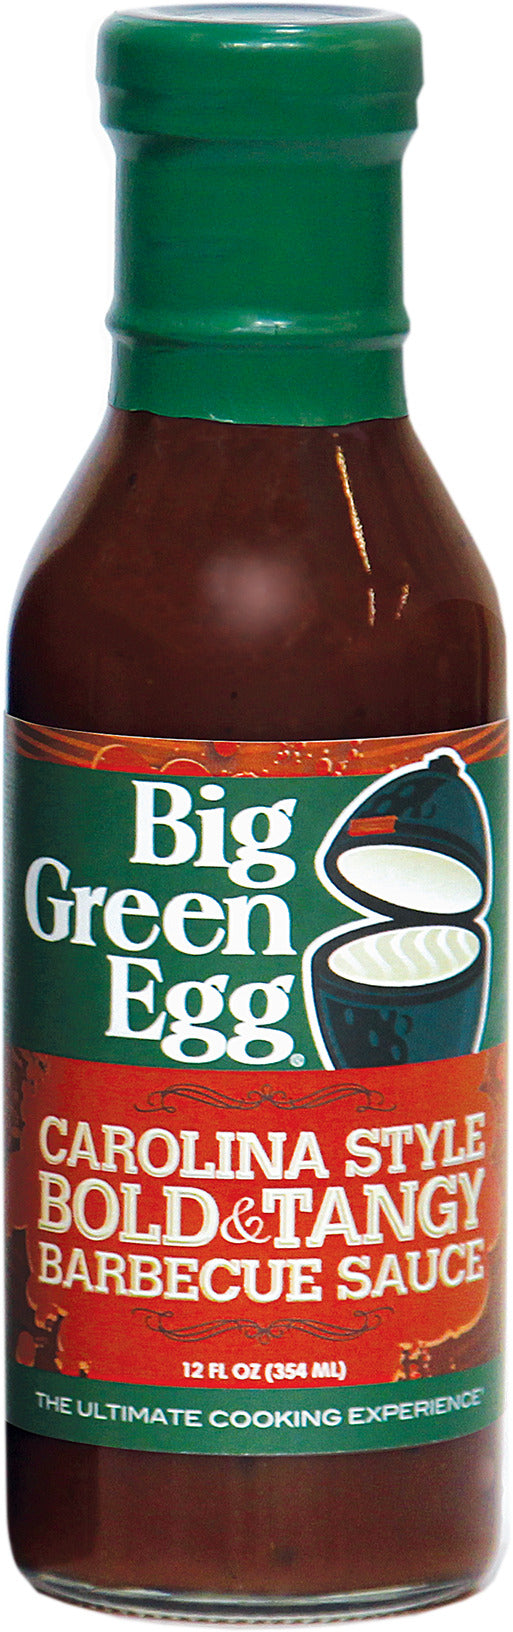 Big Green Egg BBQ Sauce, Carolina Style - Bold & Tangy